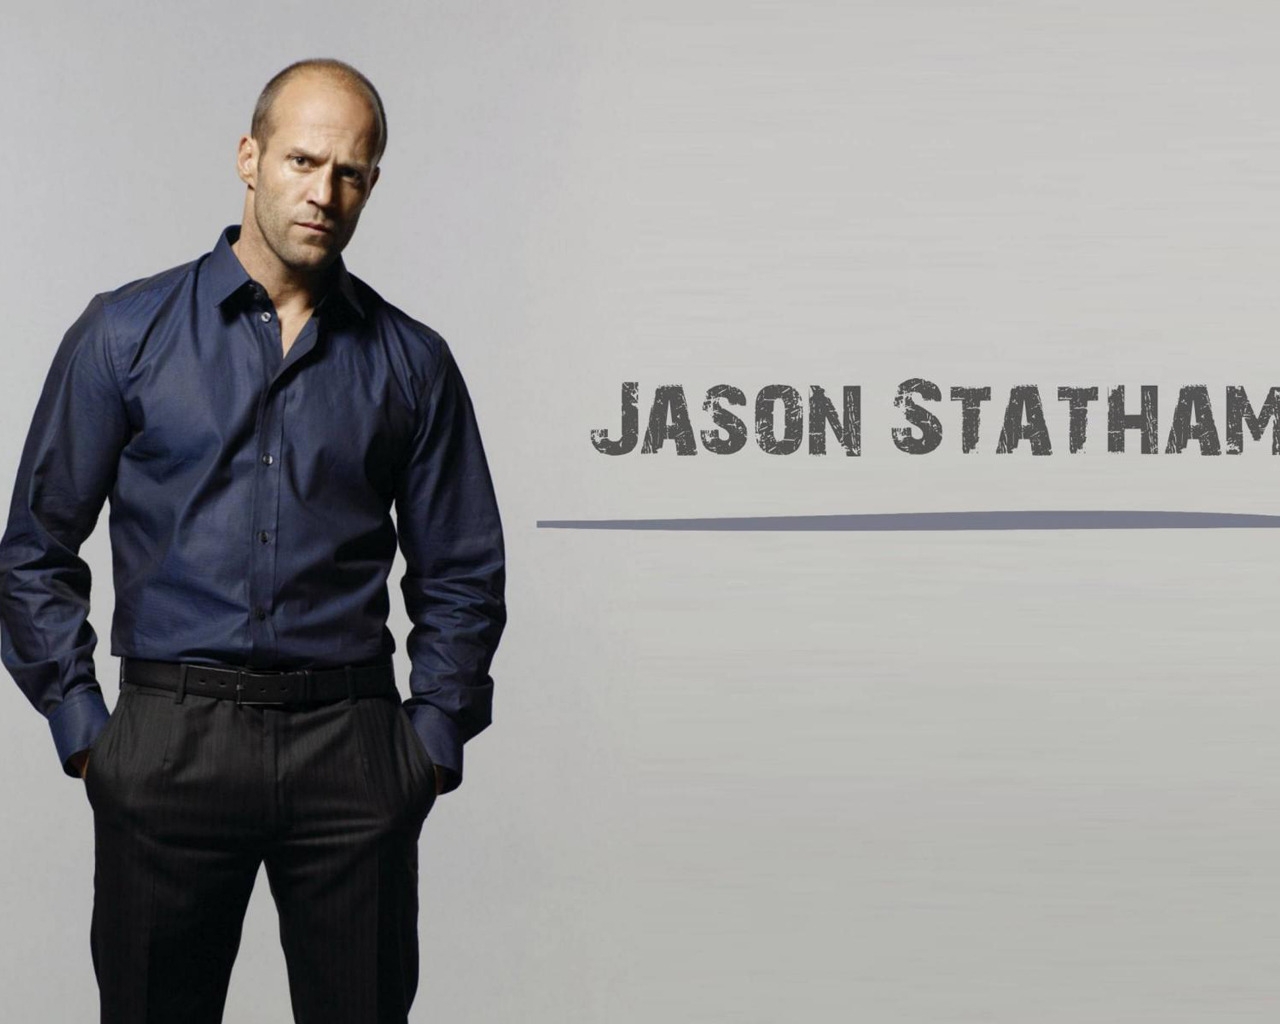 Jason Statham Poster for 1280 x 1024 resolution